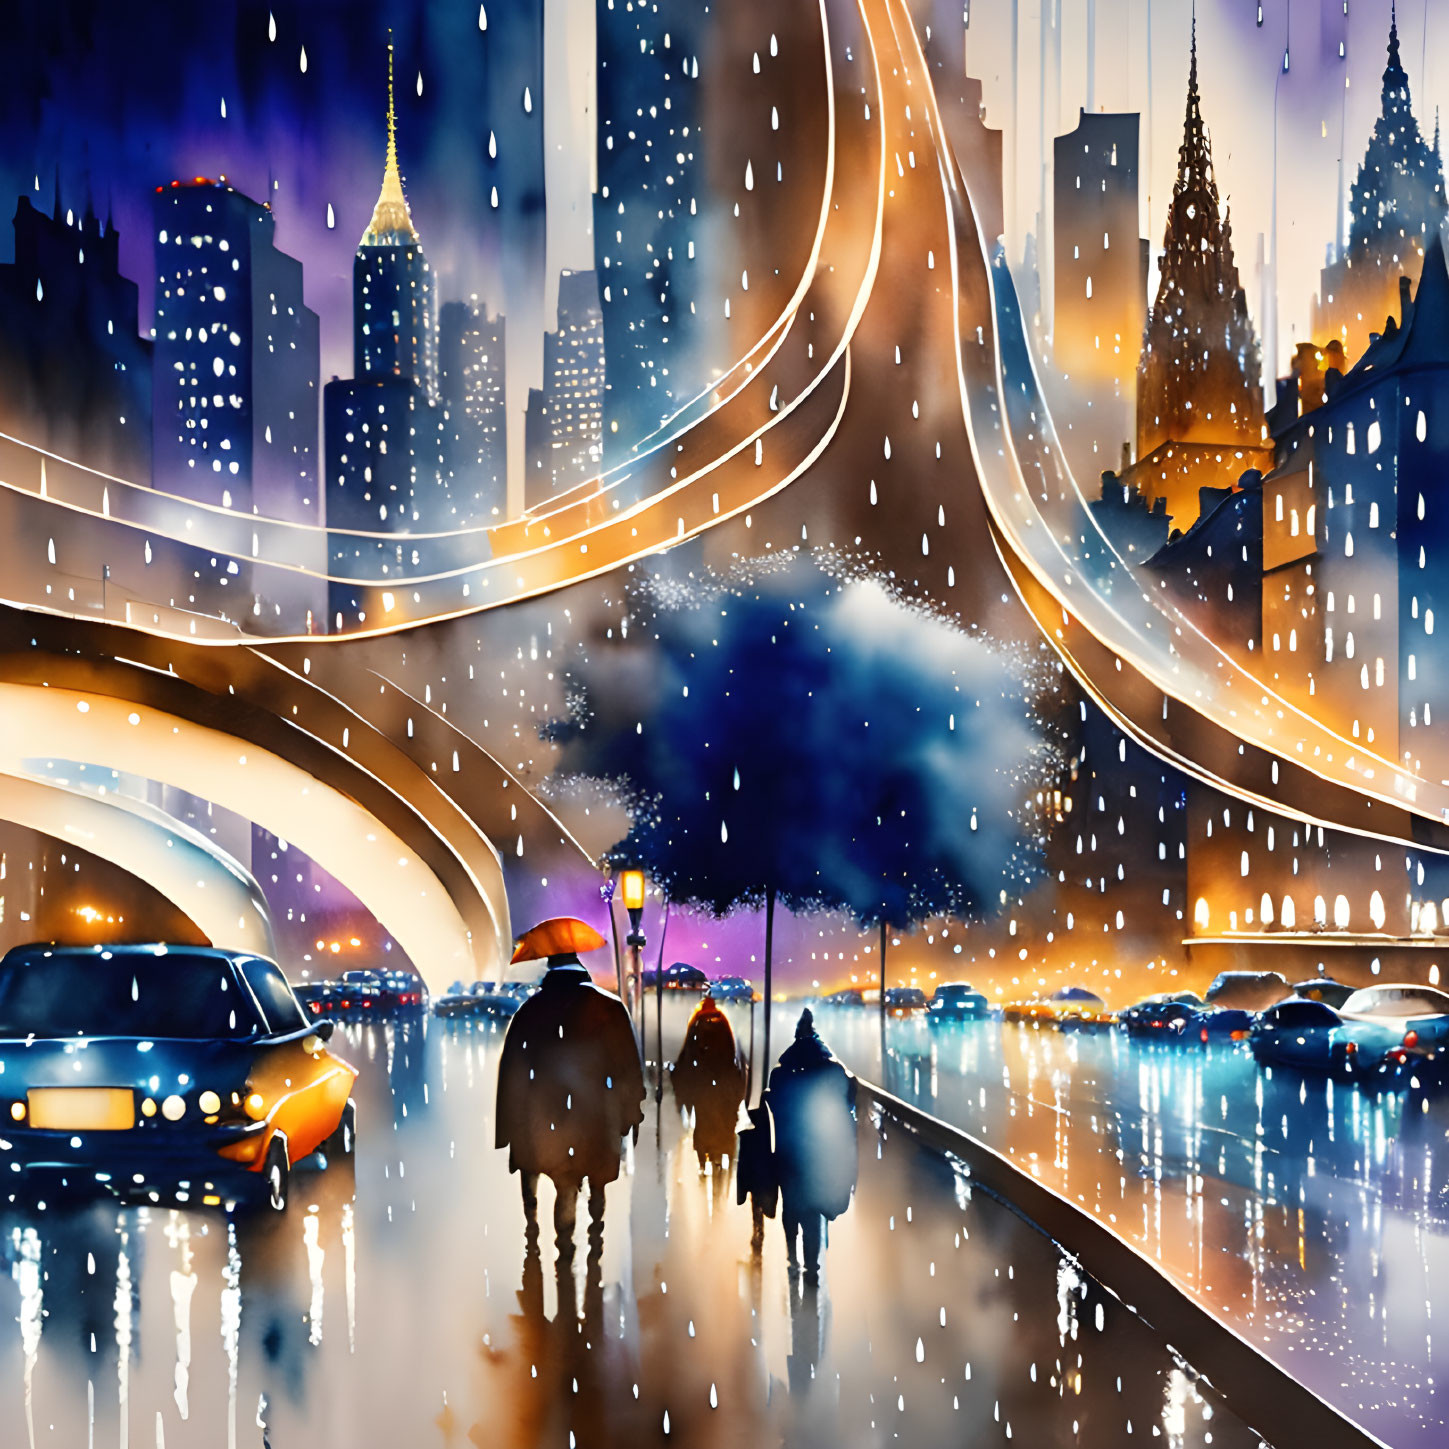 Vibrant city street scene with people, umbrellas, and cars on rainy night